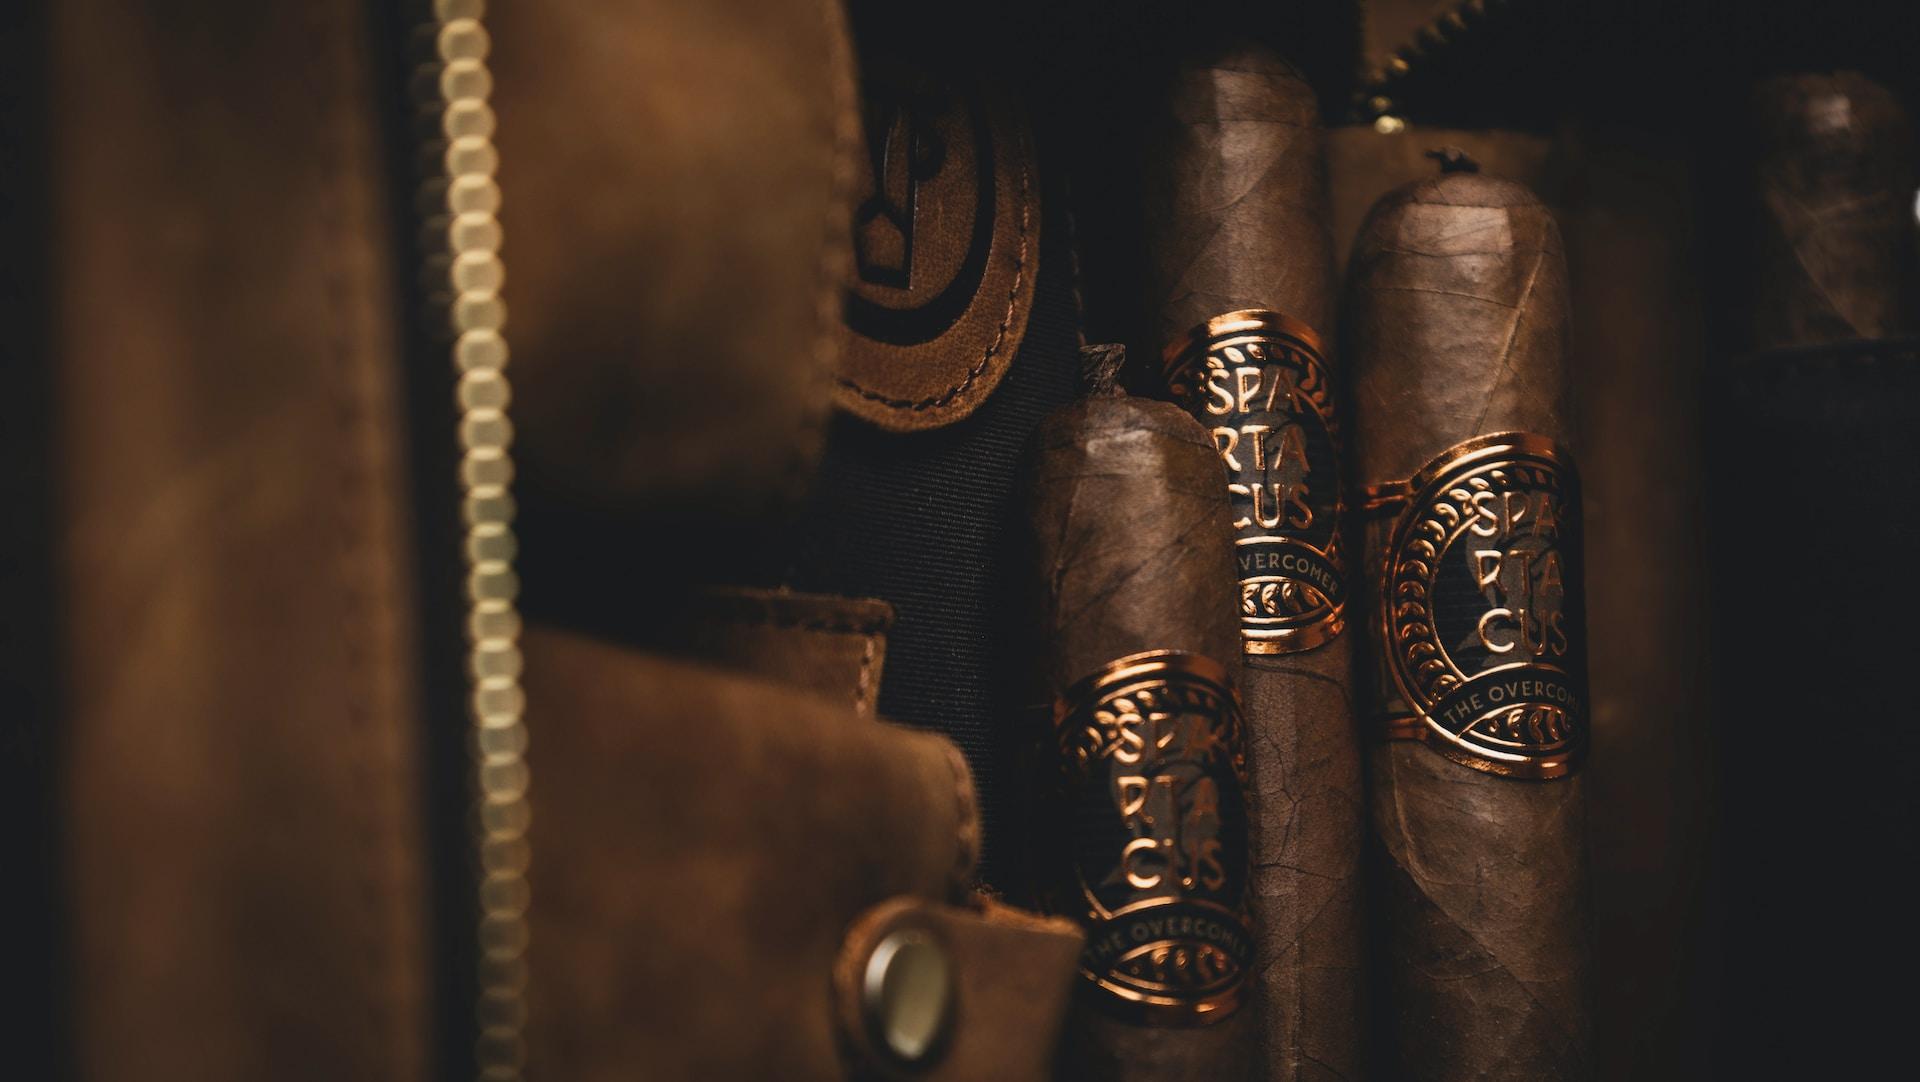 History of the three cigars “La Pinta” “EL Taino” and El chivito”